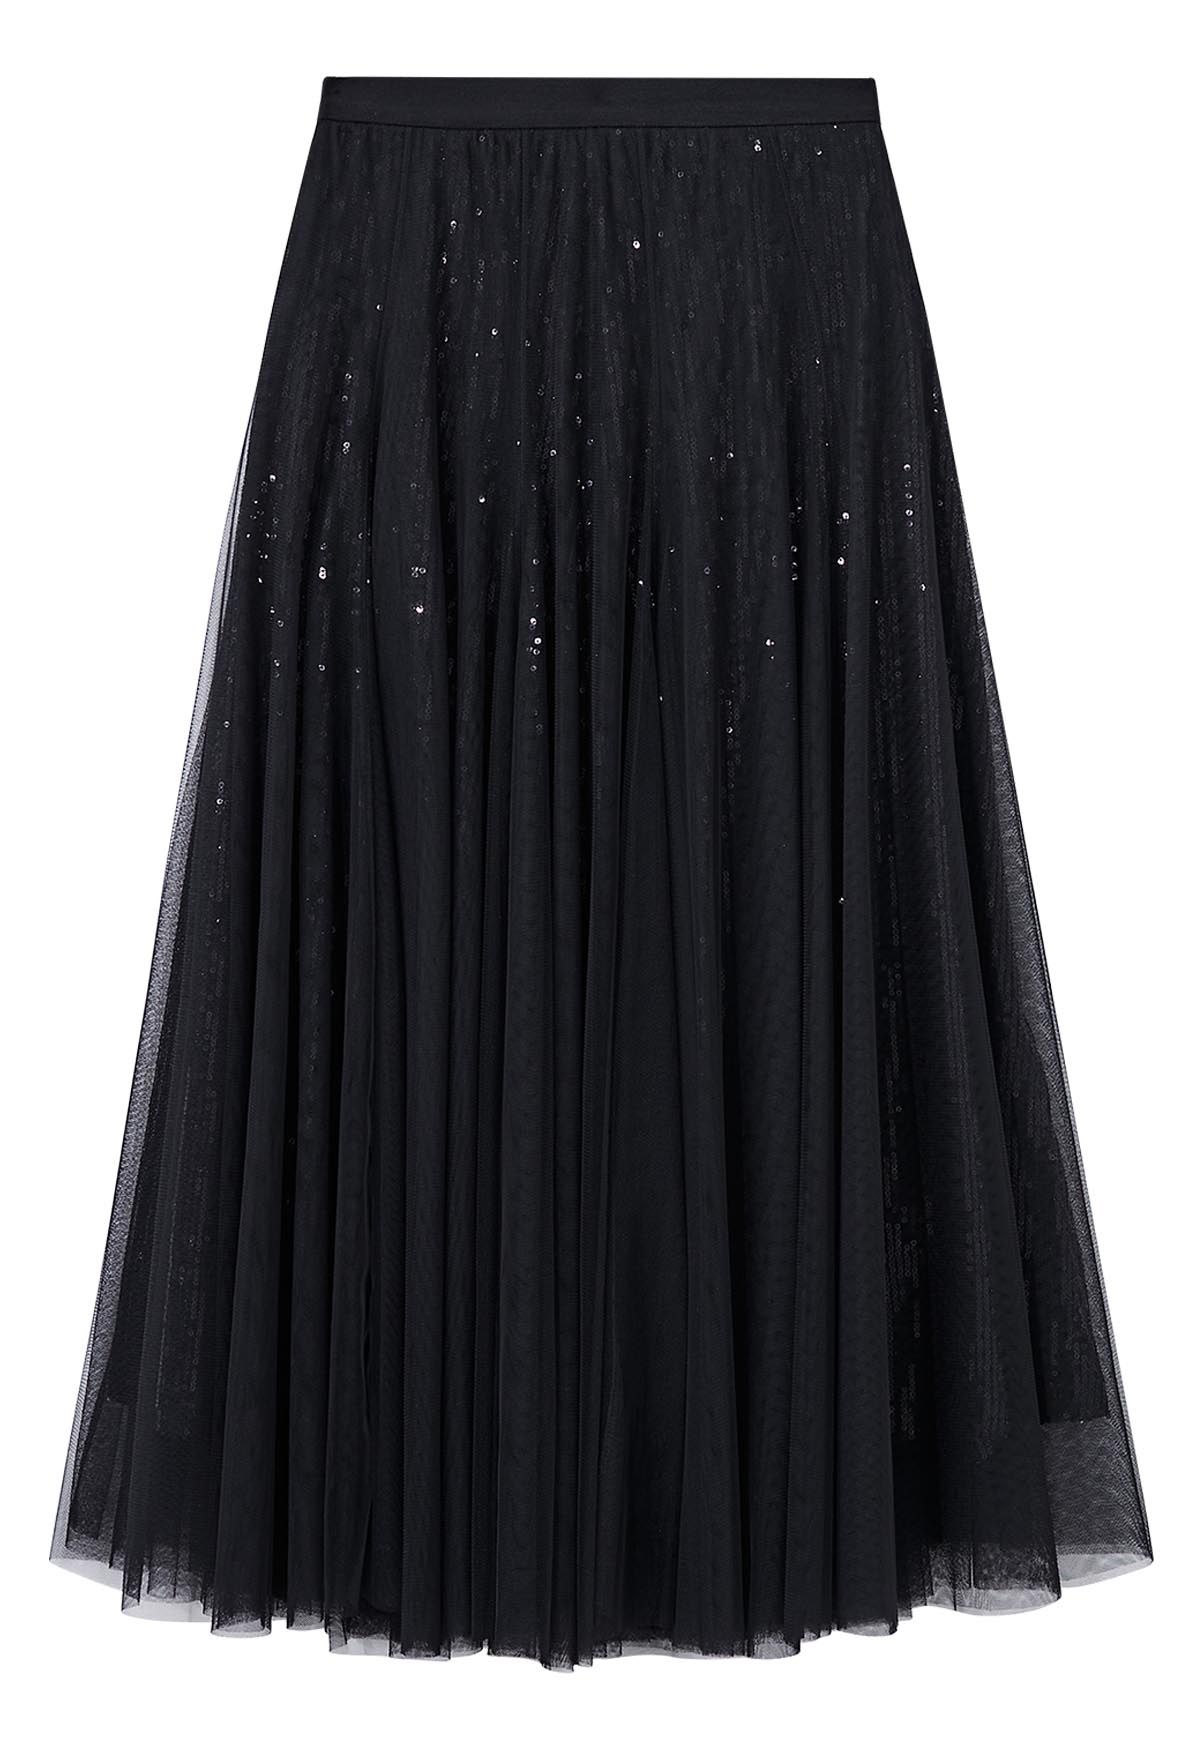 Ravishing Sequins Mesh Tulle Midi Skirt in Black - Retro, Indie and ...